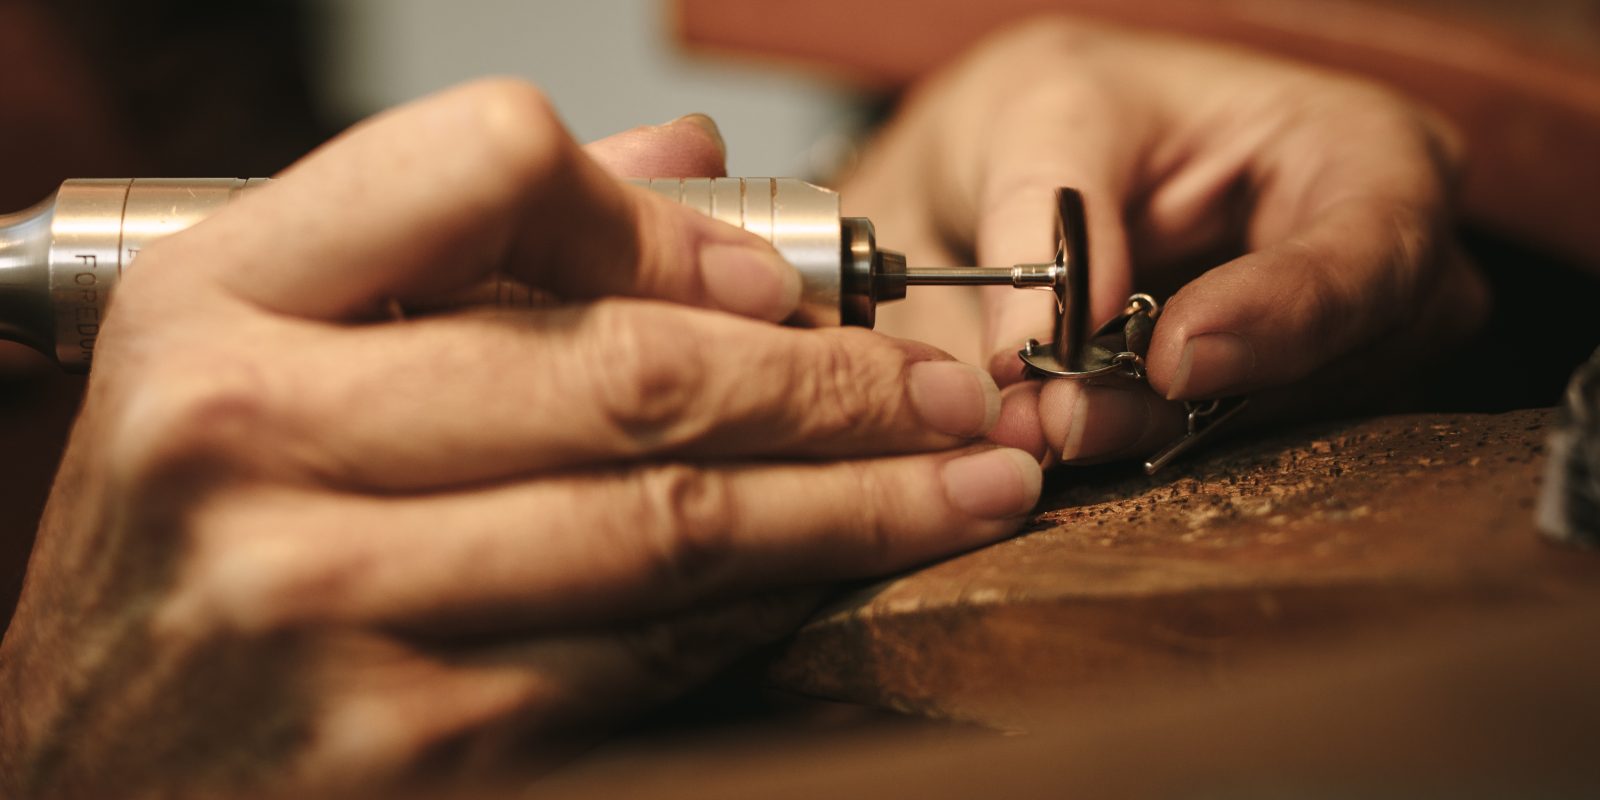 Hands of jeweler polishing a jewelry piece with flex shaft.